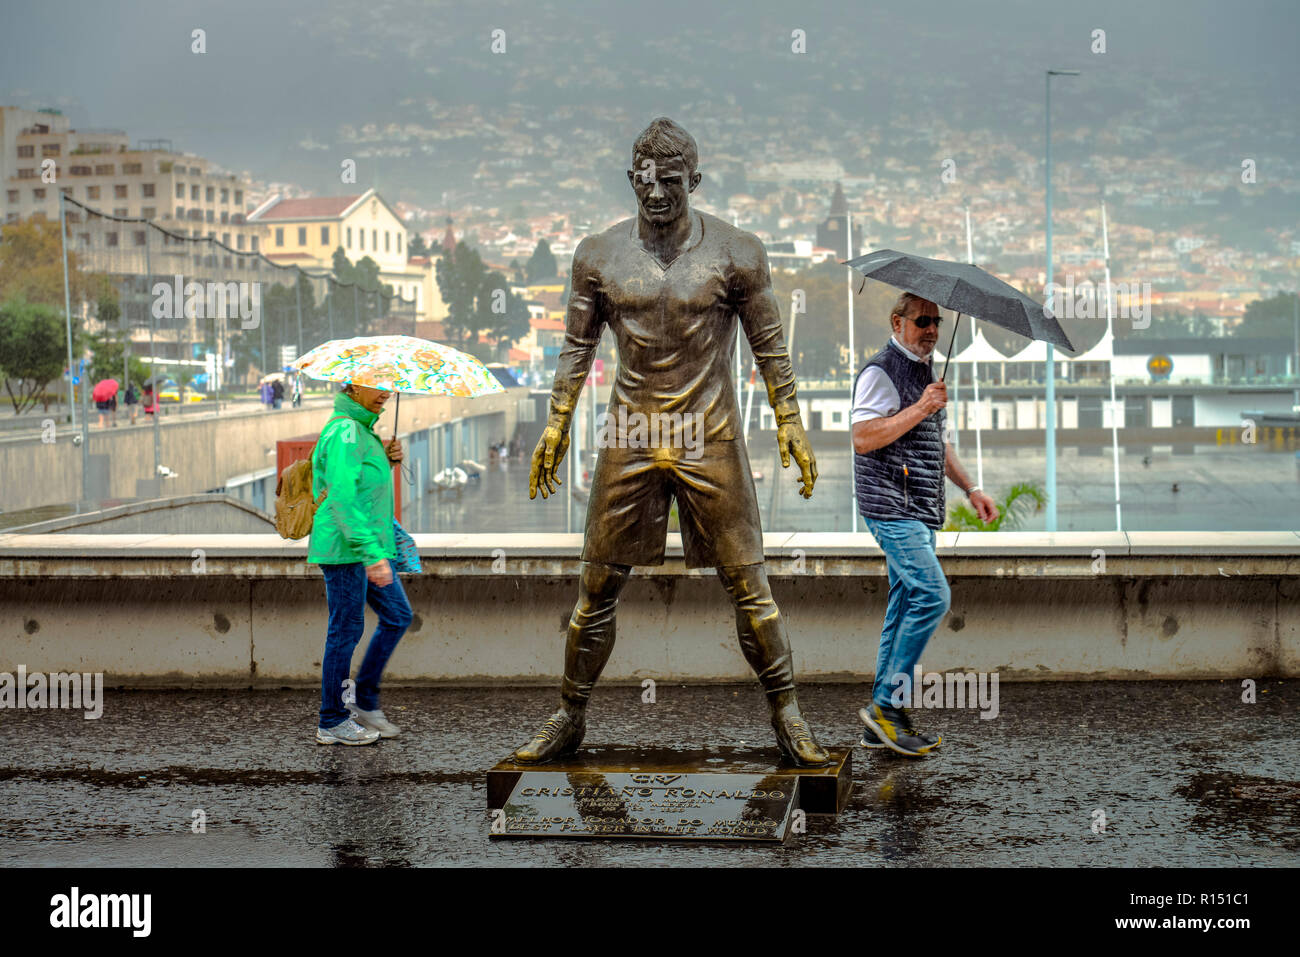 Statue, Museum CR 7, Av. Sa Carneiro, Funchal, Madeira, Portugal Stockfoto